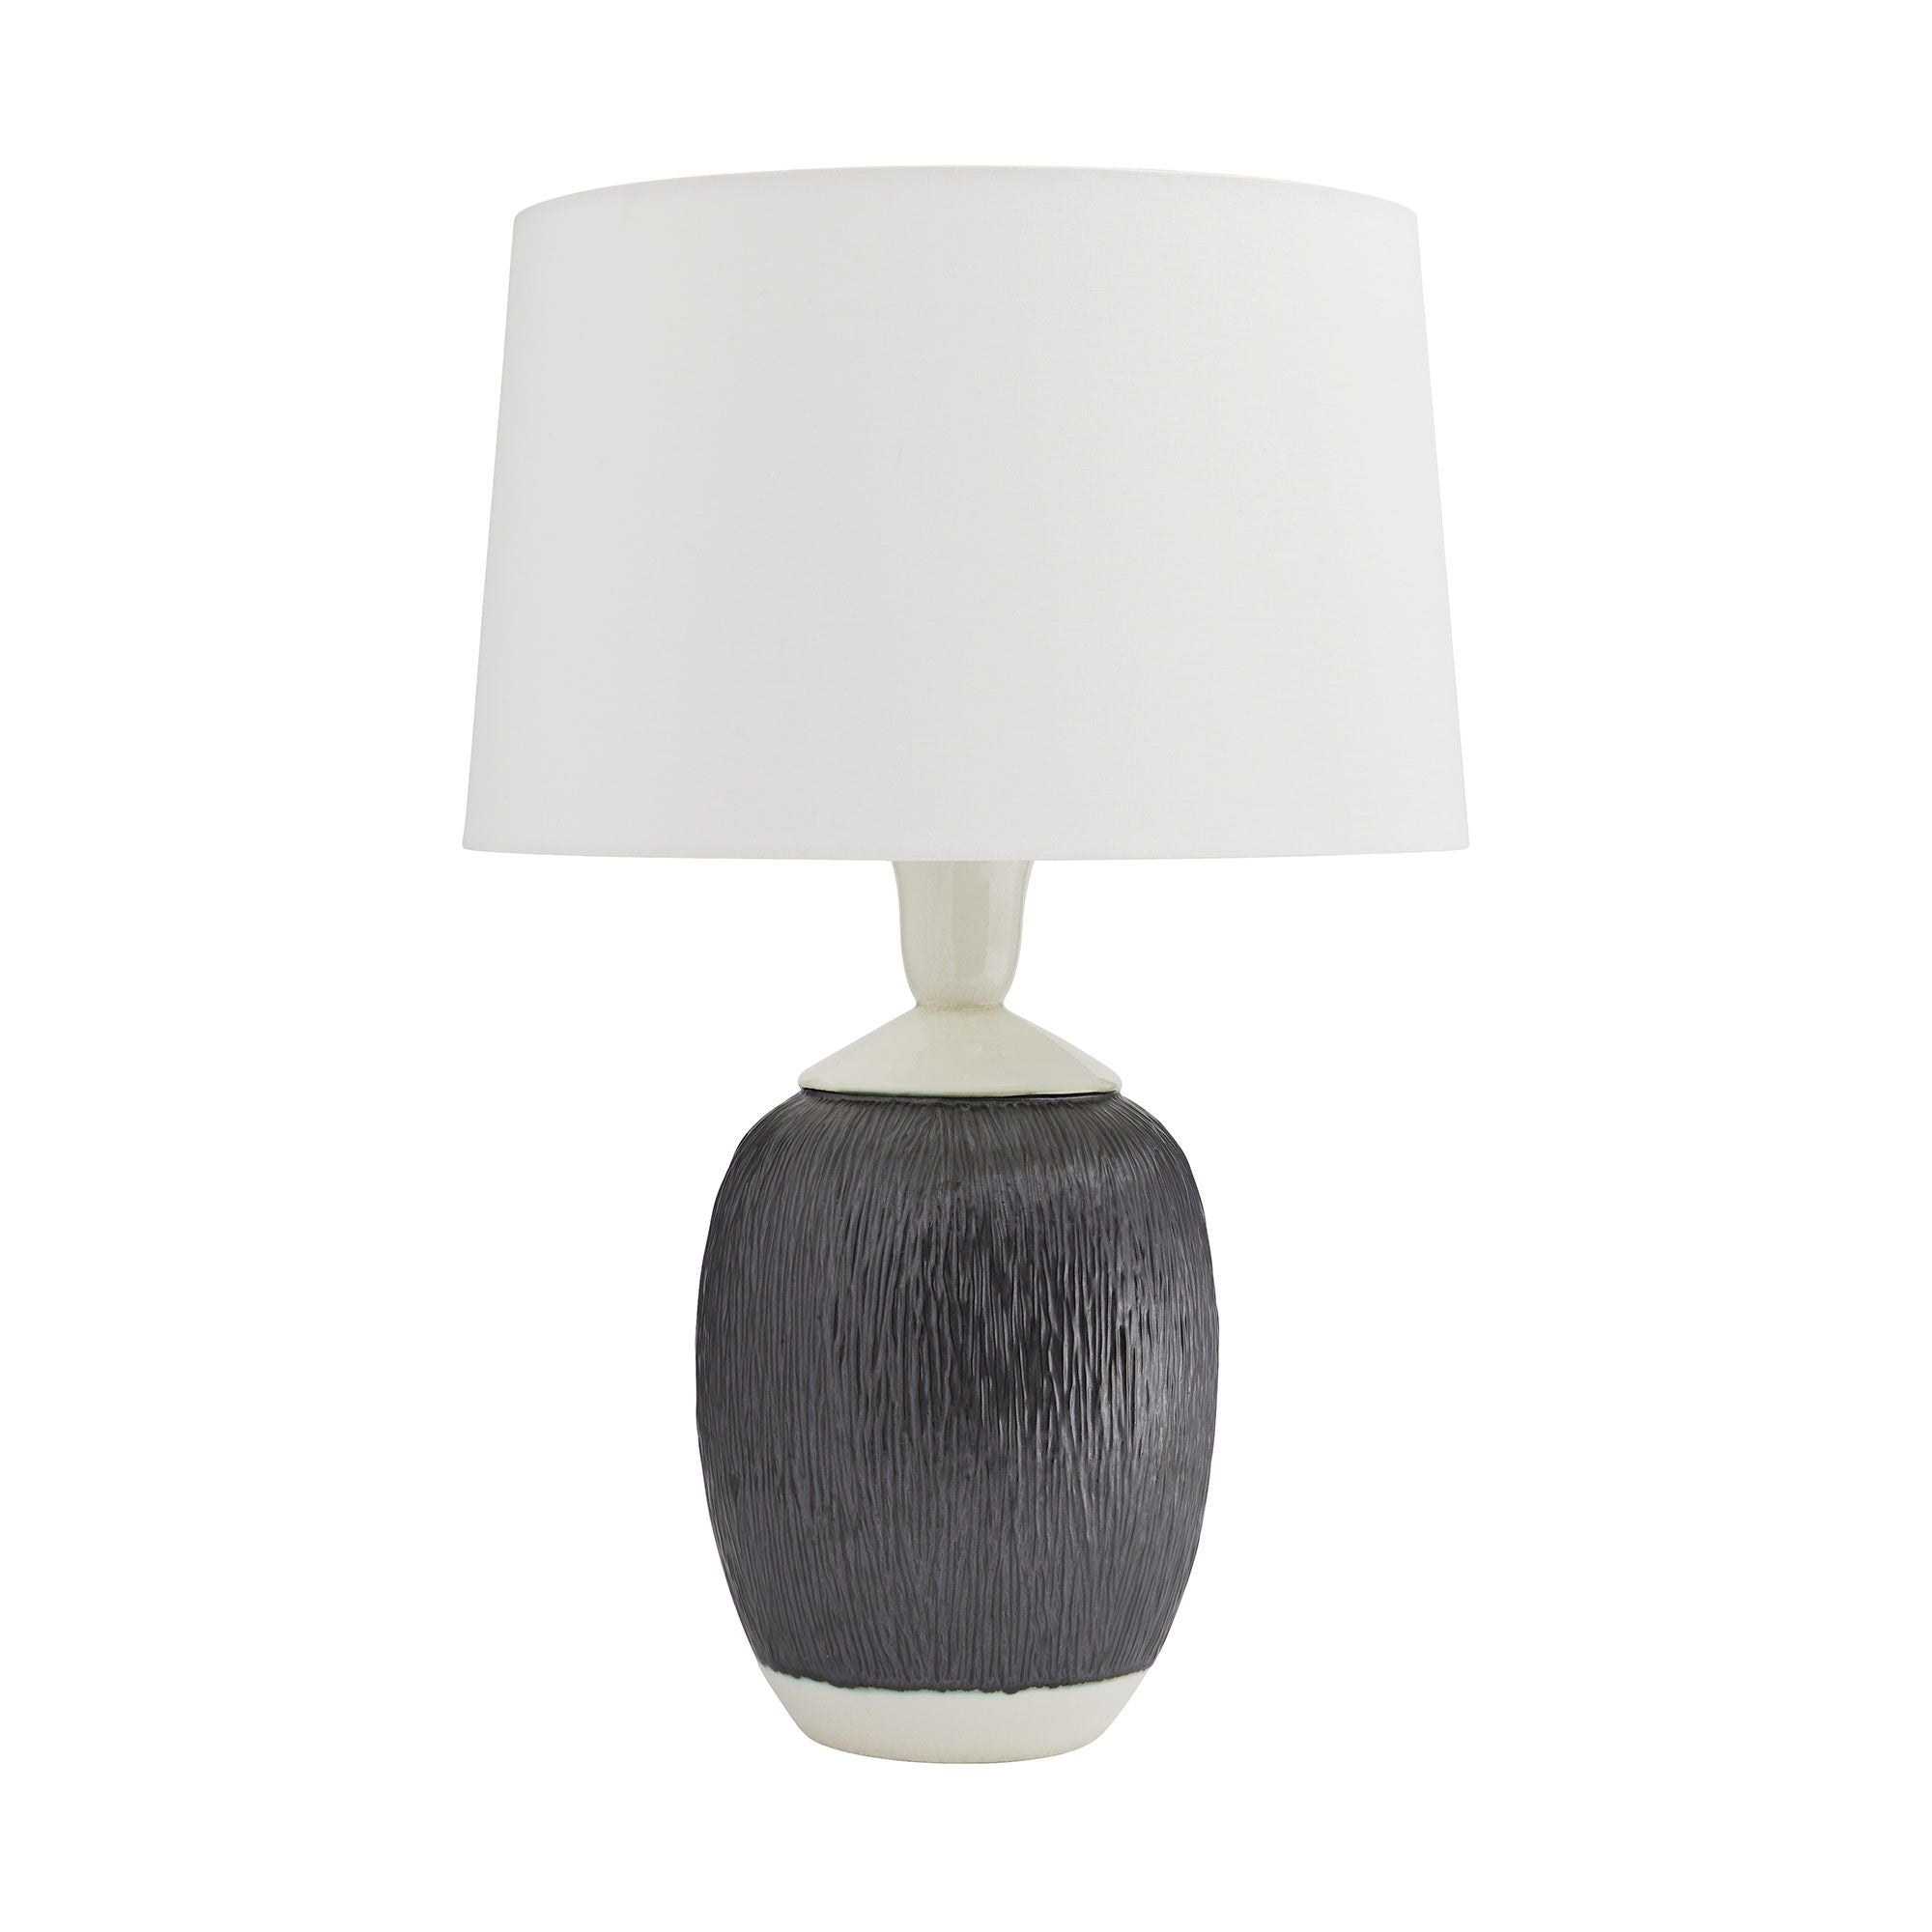 Table lamp - 17845-226 | ARTERIORS